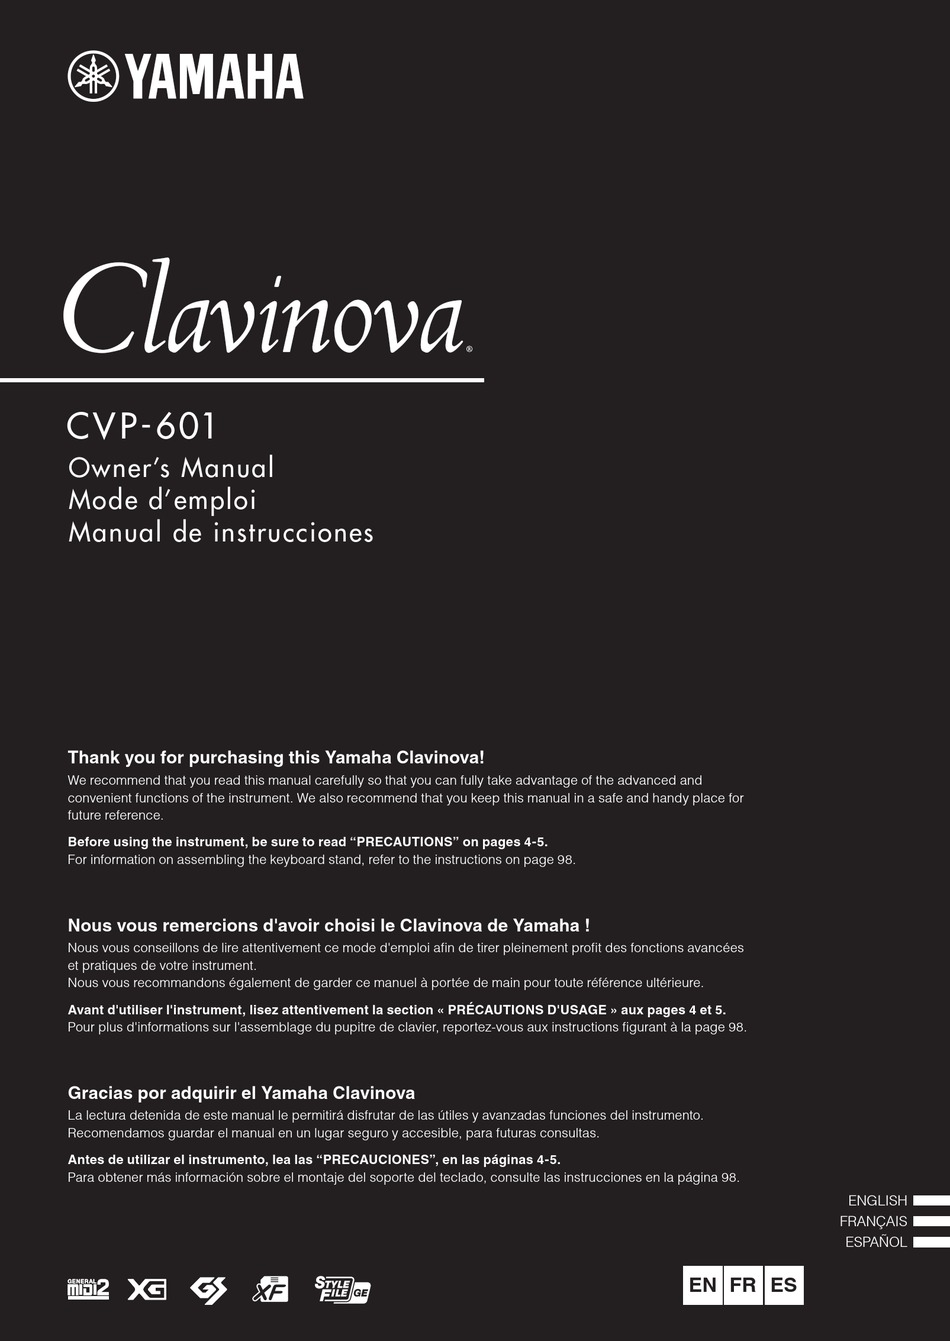 YAMAHA CLAVINOVA CVP-601 OWNER'S MANUAL Pdf Download | ManualsLib